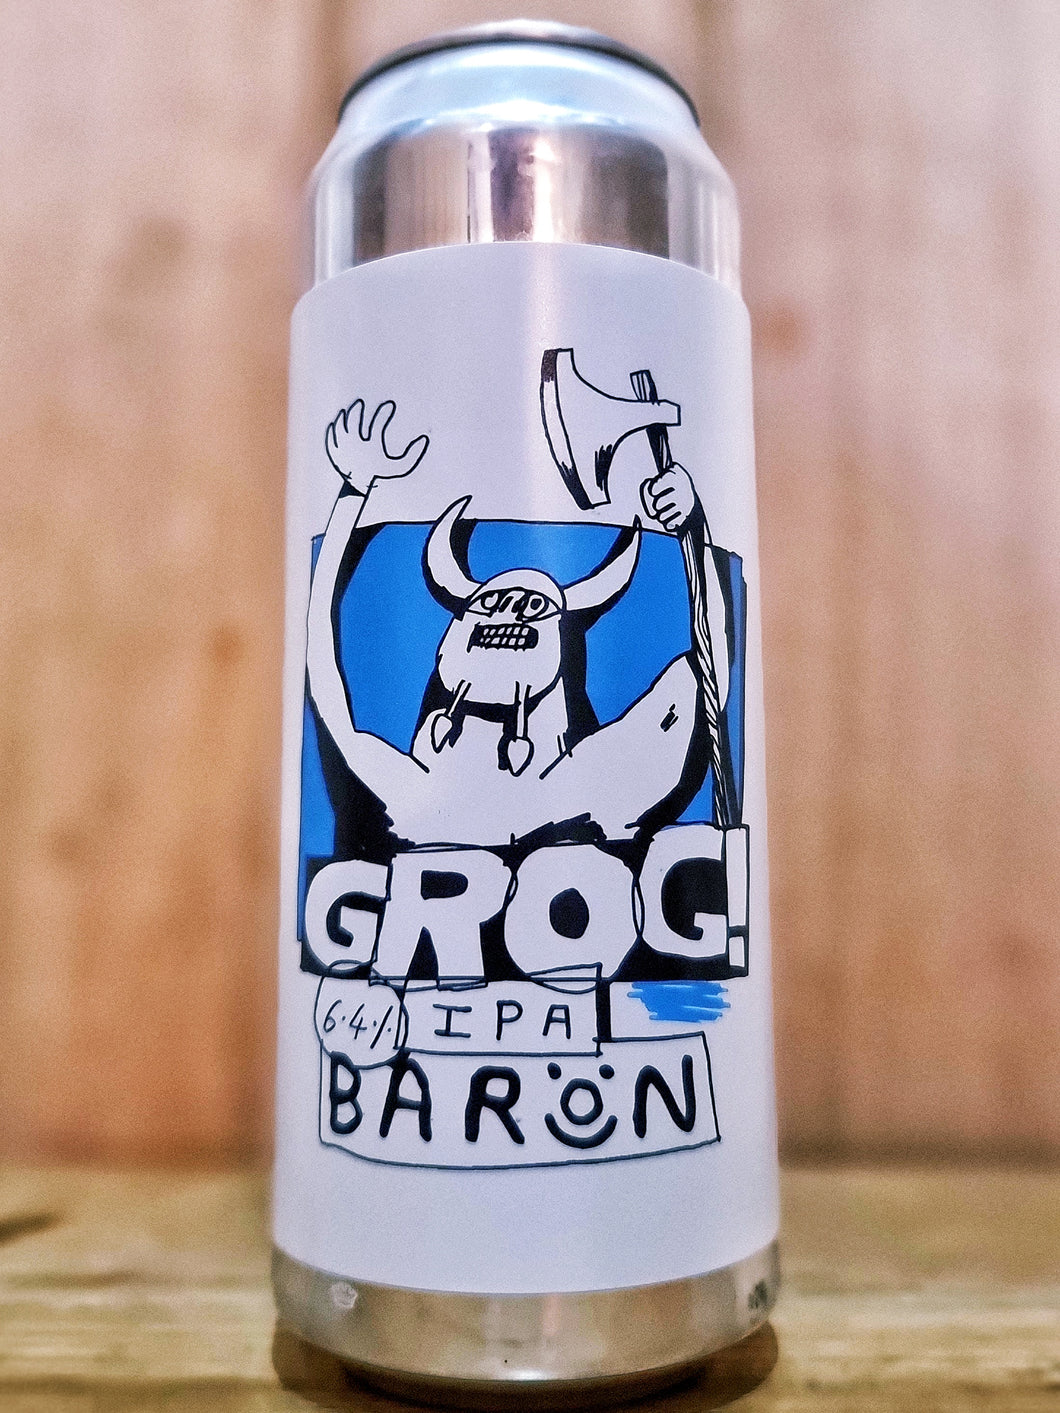 Baron Brewing - GROG!